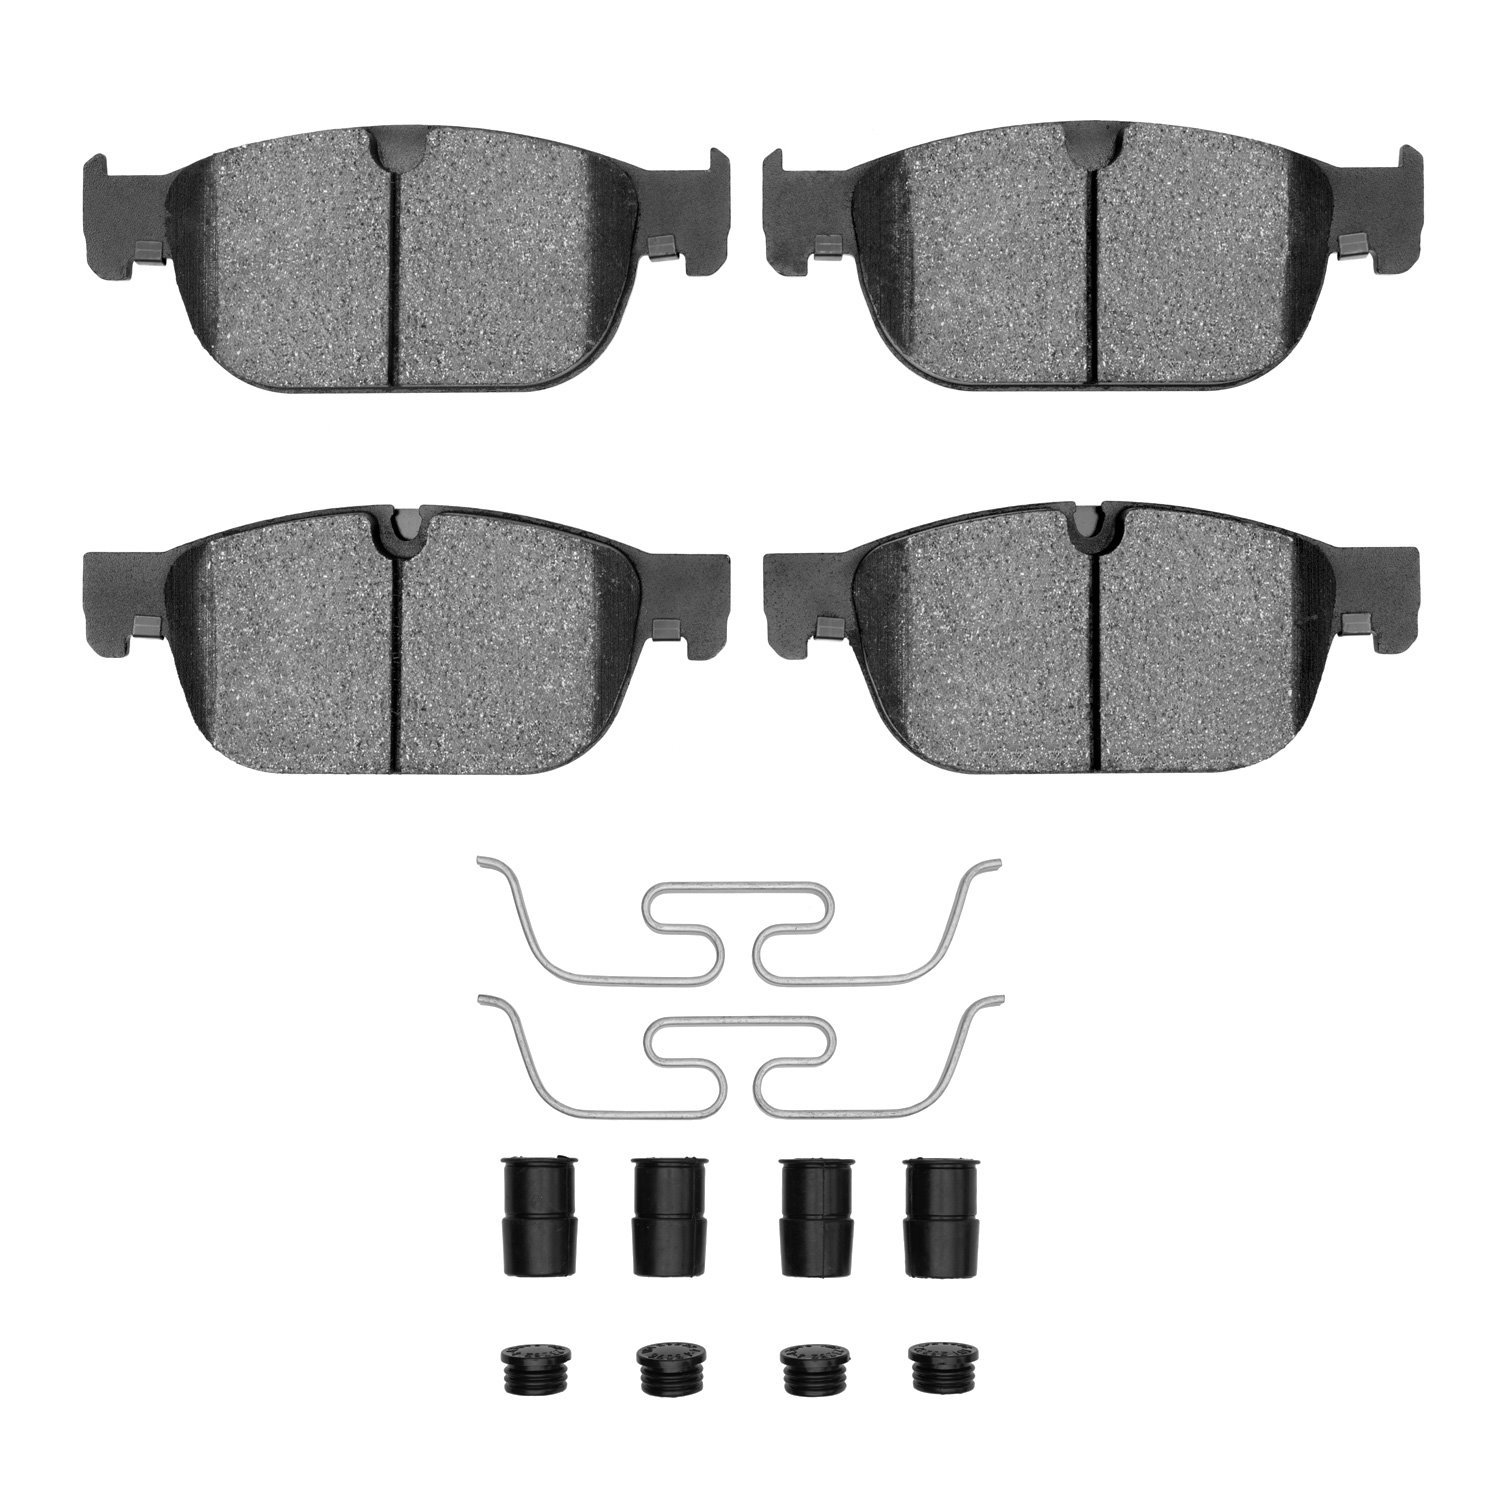 1311-1865-01 3000-Series Semi-Metallic Brake Pads & Hardware Kit, Fits Select Multiple Makes/Models, Position: Front